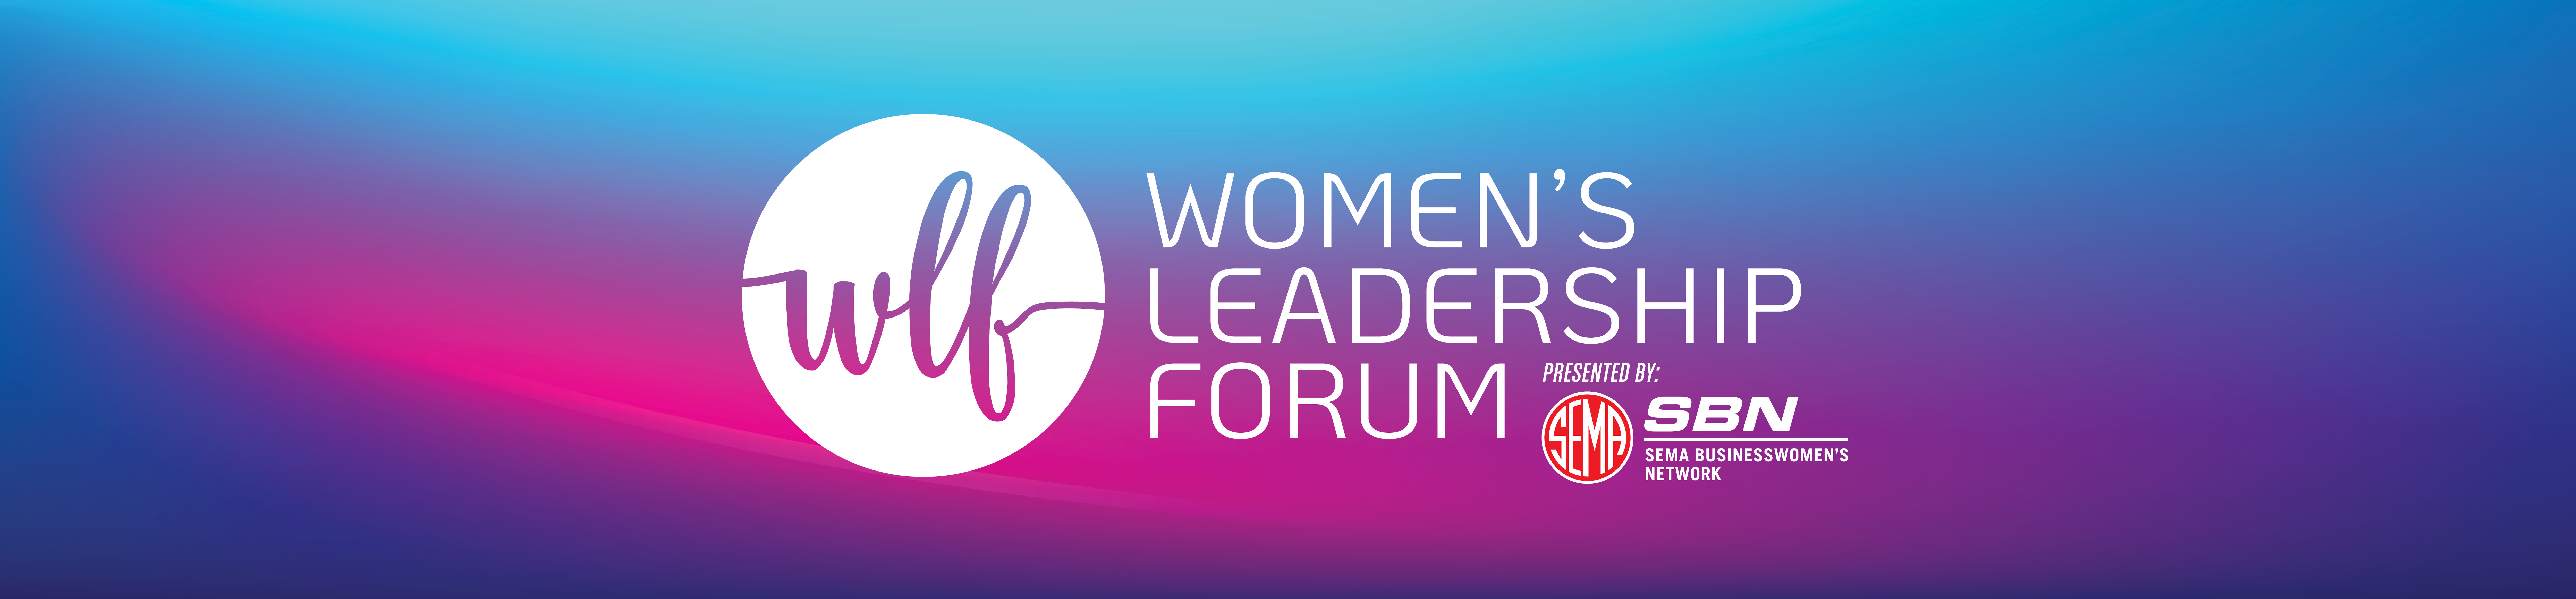 Women's Leadership Forum Presented by SBN - SEMA Businesswomen's Network - header